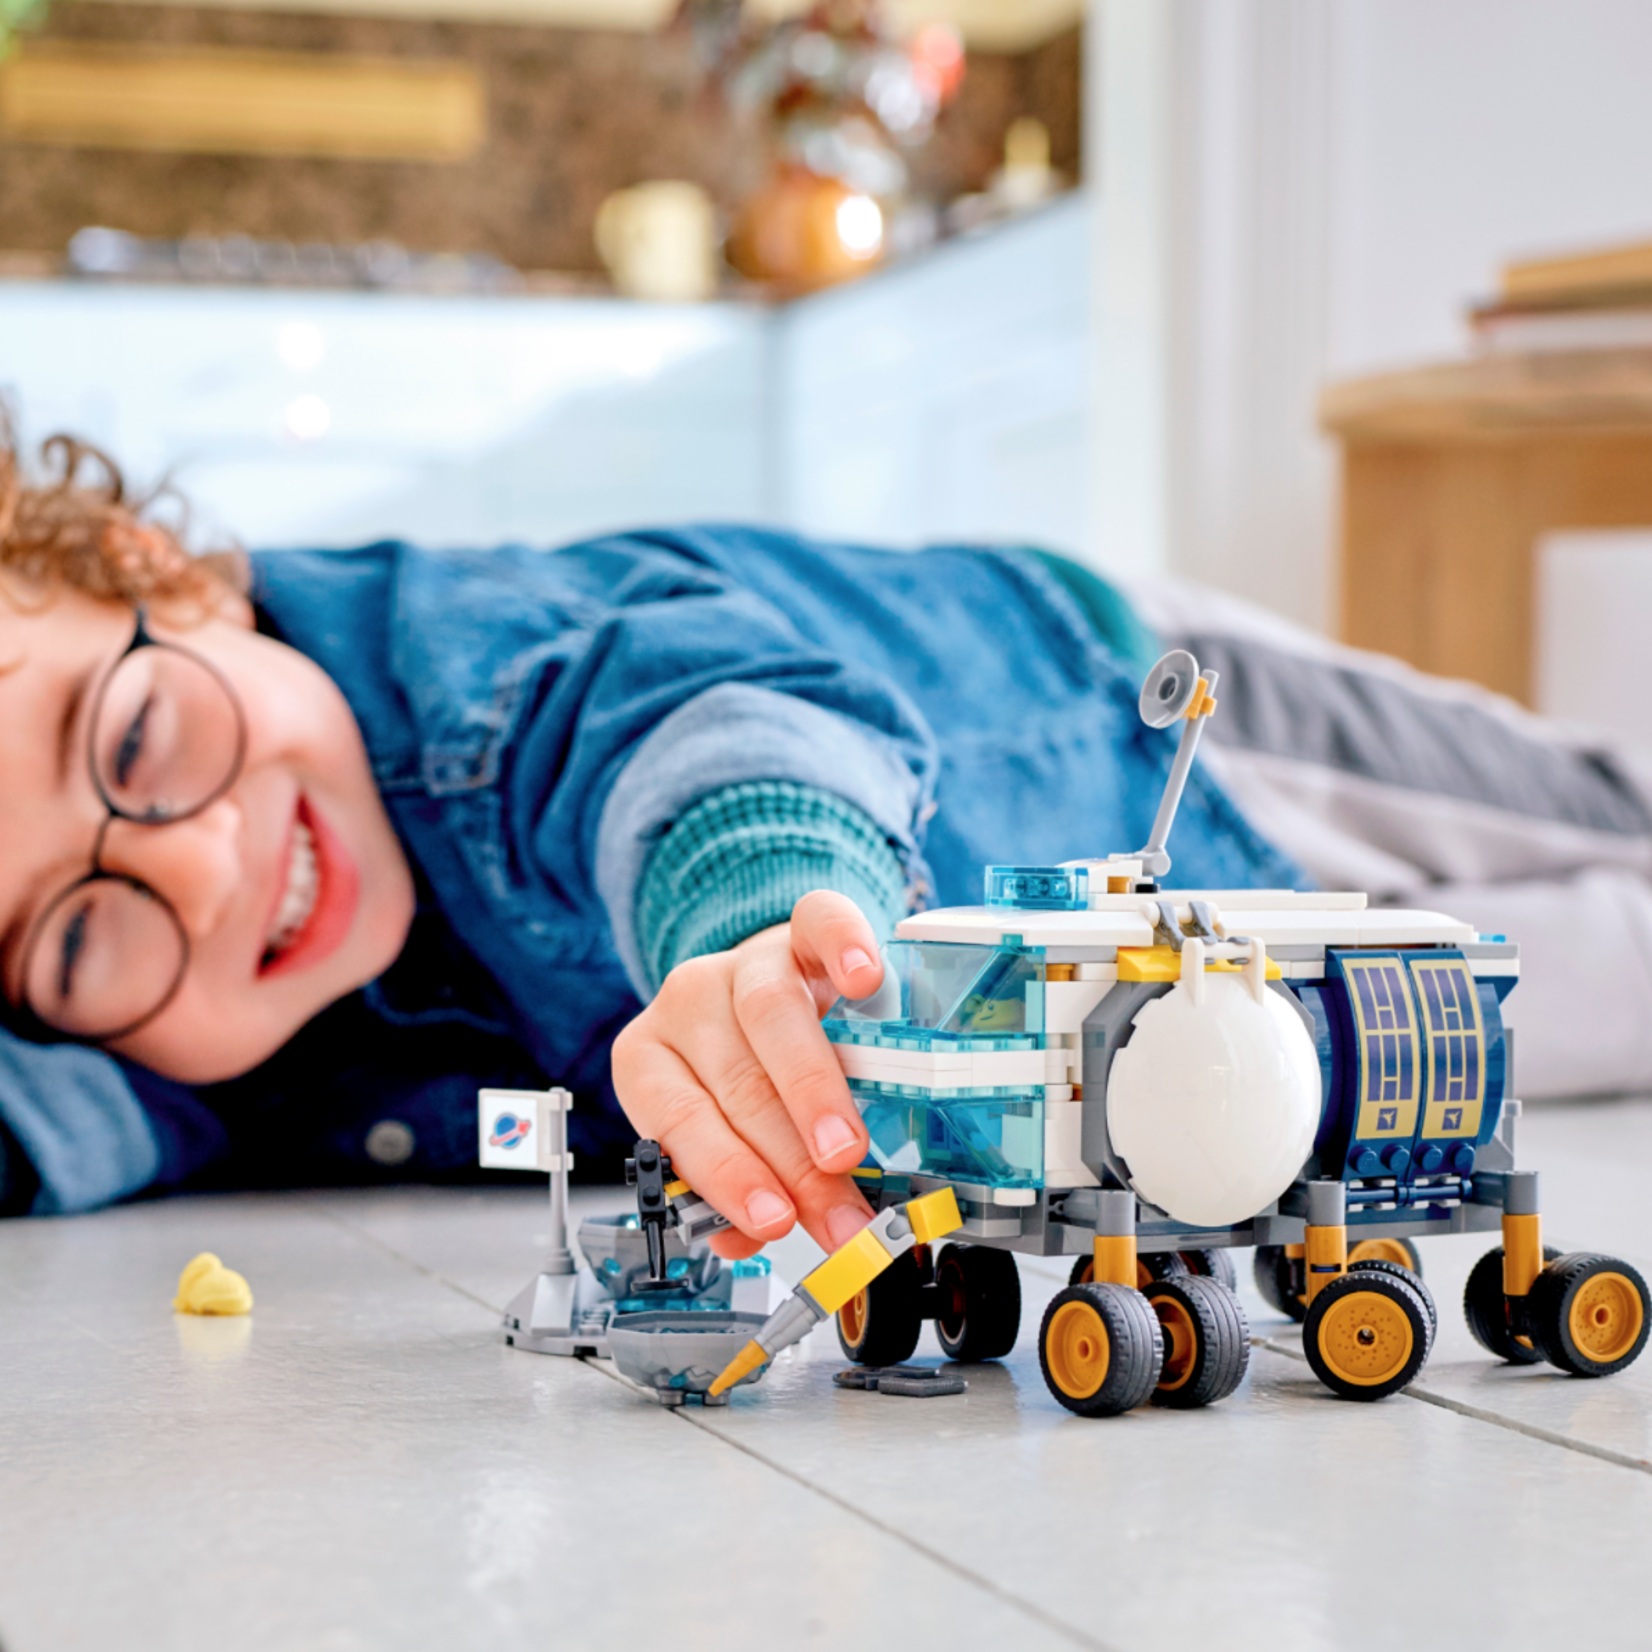 LEGO LEGO City Lunar Roving Vehicle